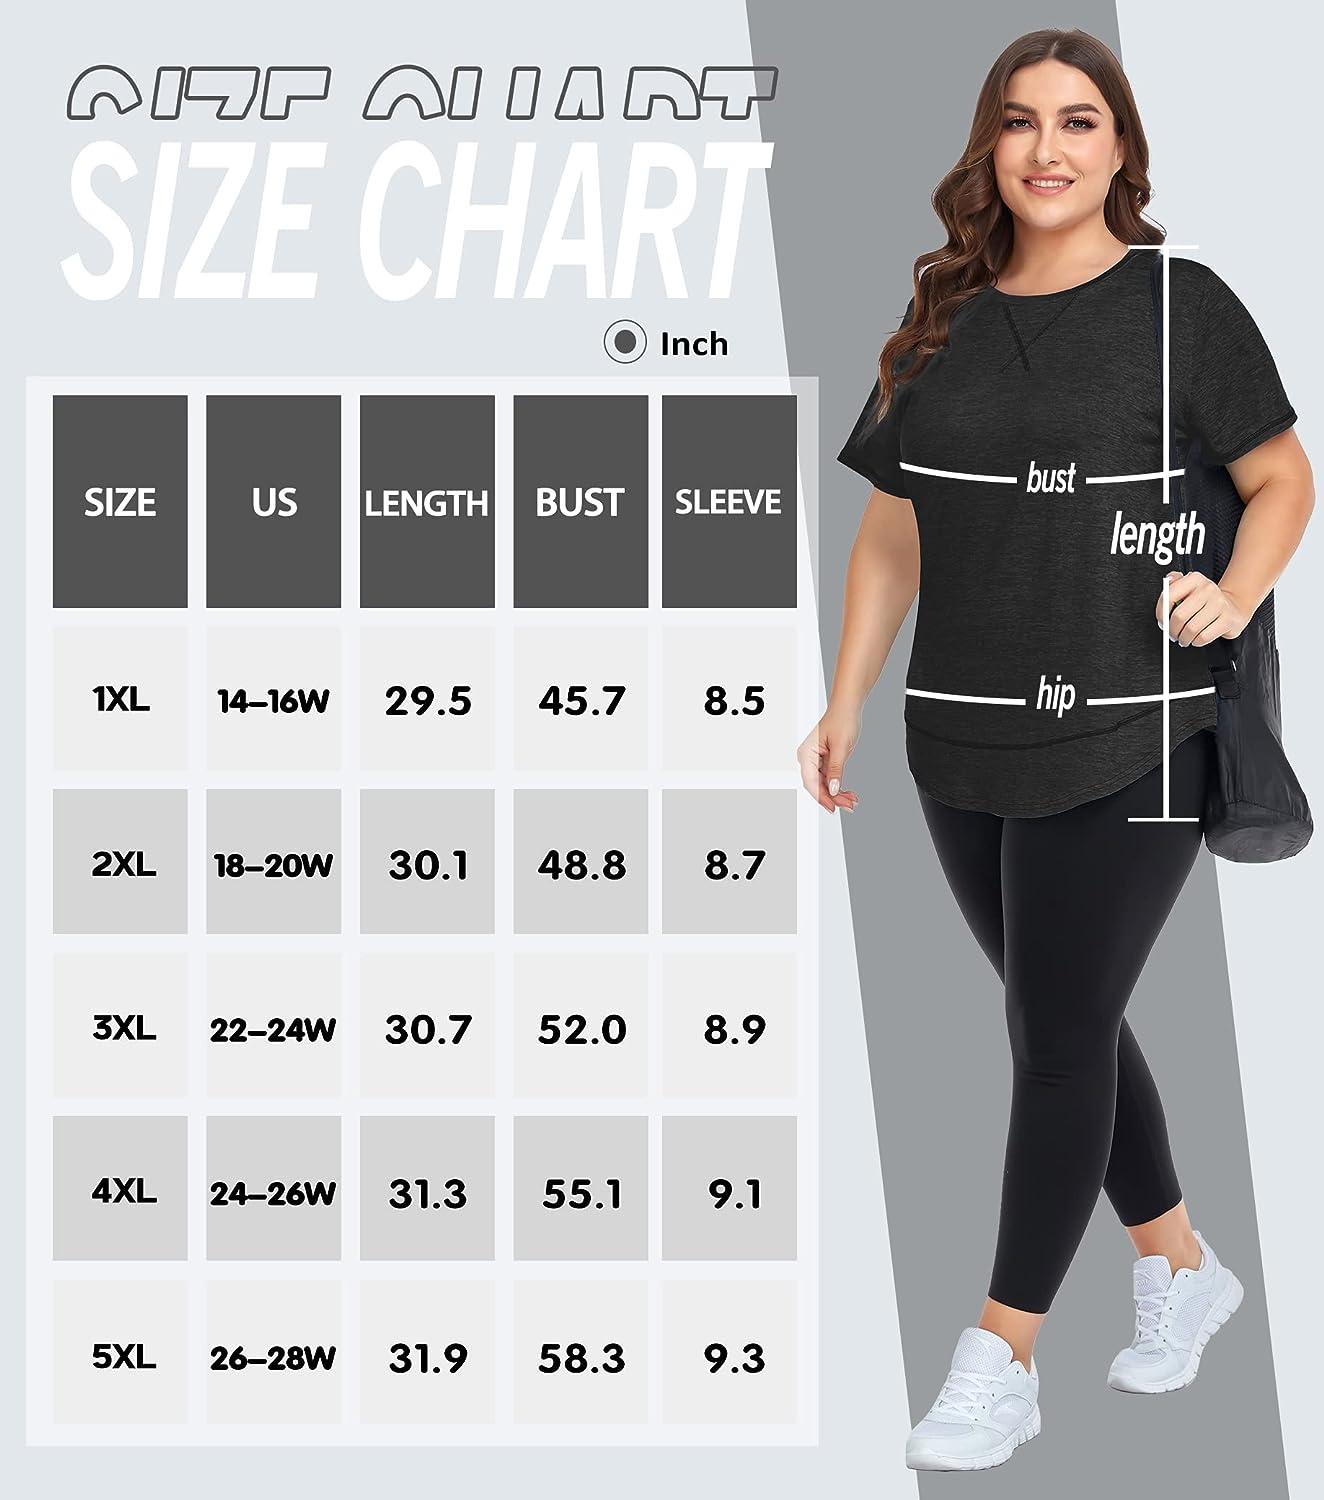 Women's Plus Size Workout Tops & Shirts